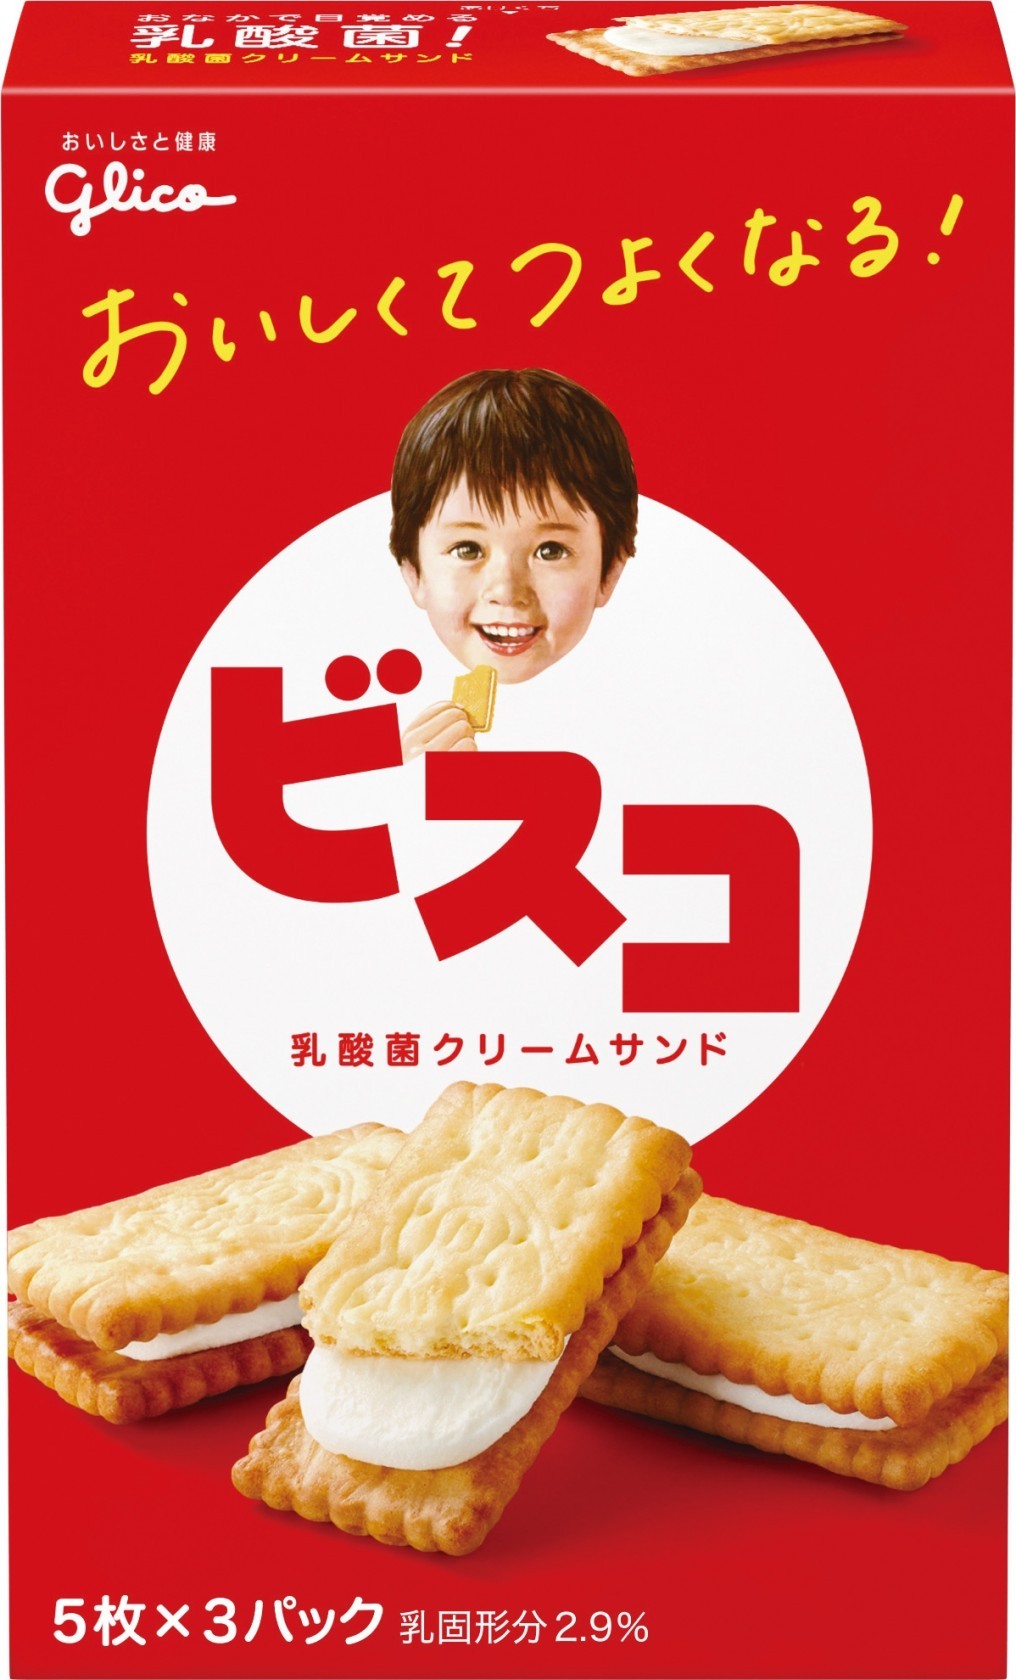 Bisco biscuit Cream บีสโก้ ขนมปังกรอบสอดไส้ครีม สำหรับเด็ก นำเข้าจากญี่ปุ่น รสดั้งเดิม กล่องสีแดง 60 g